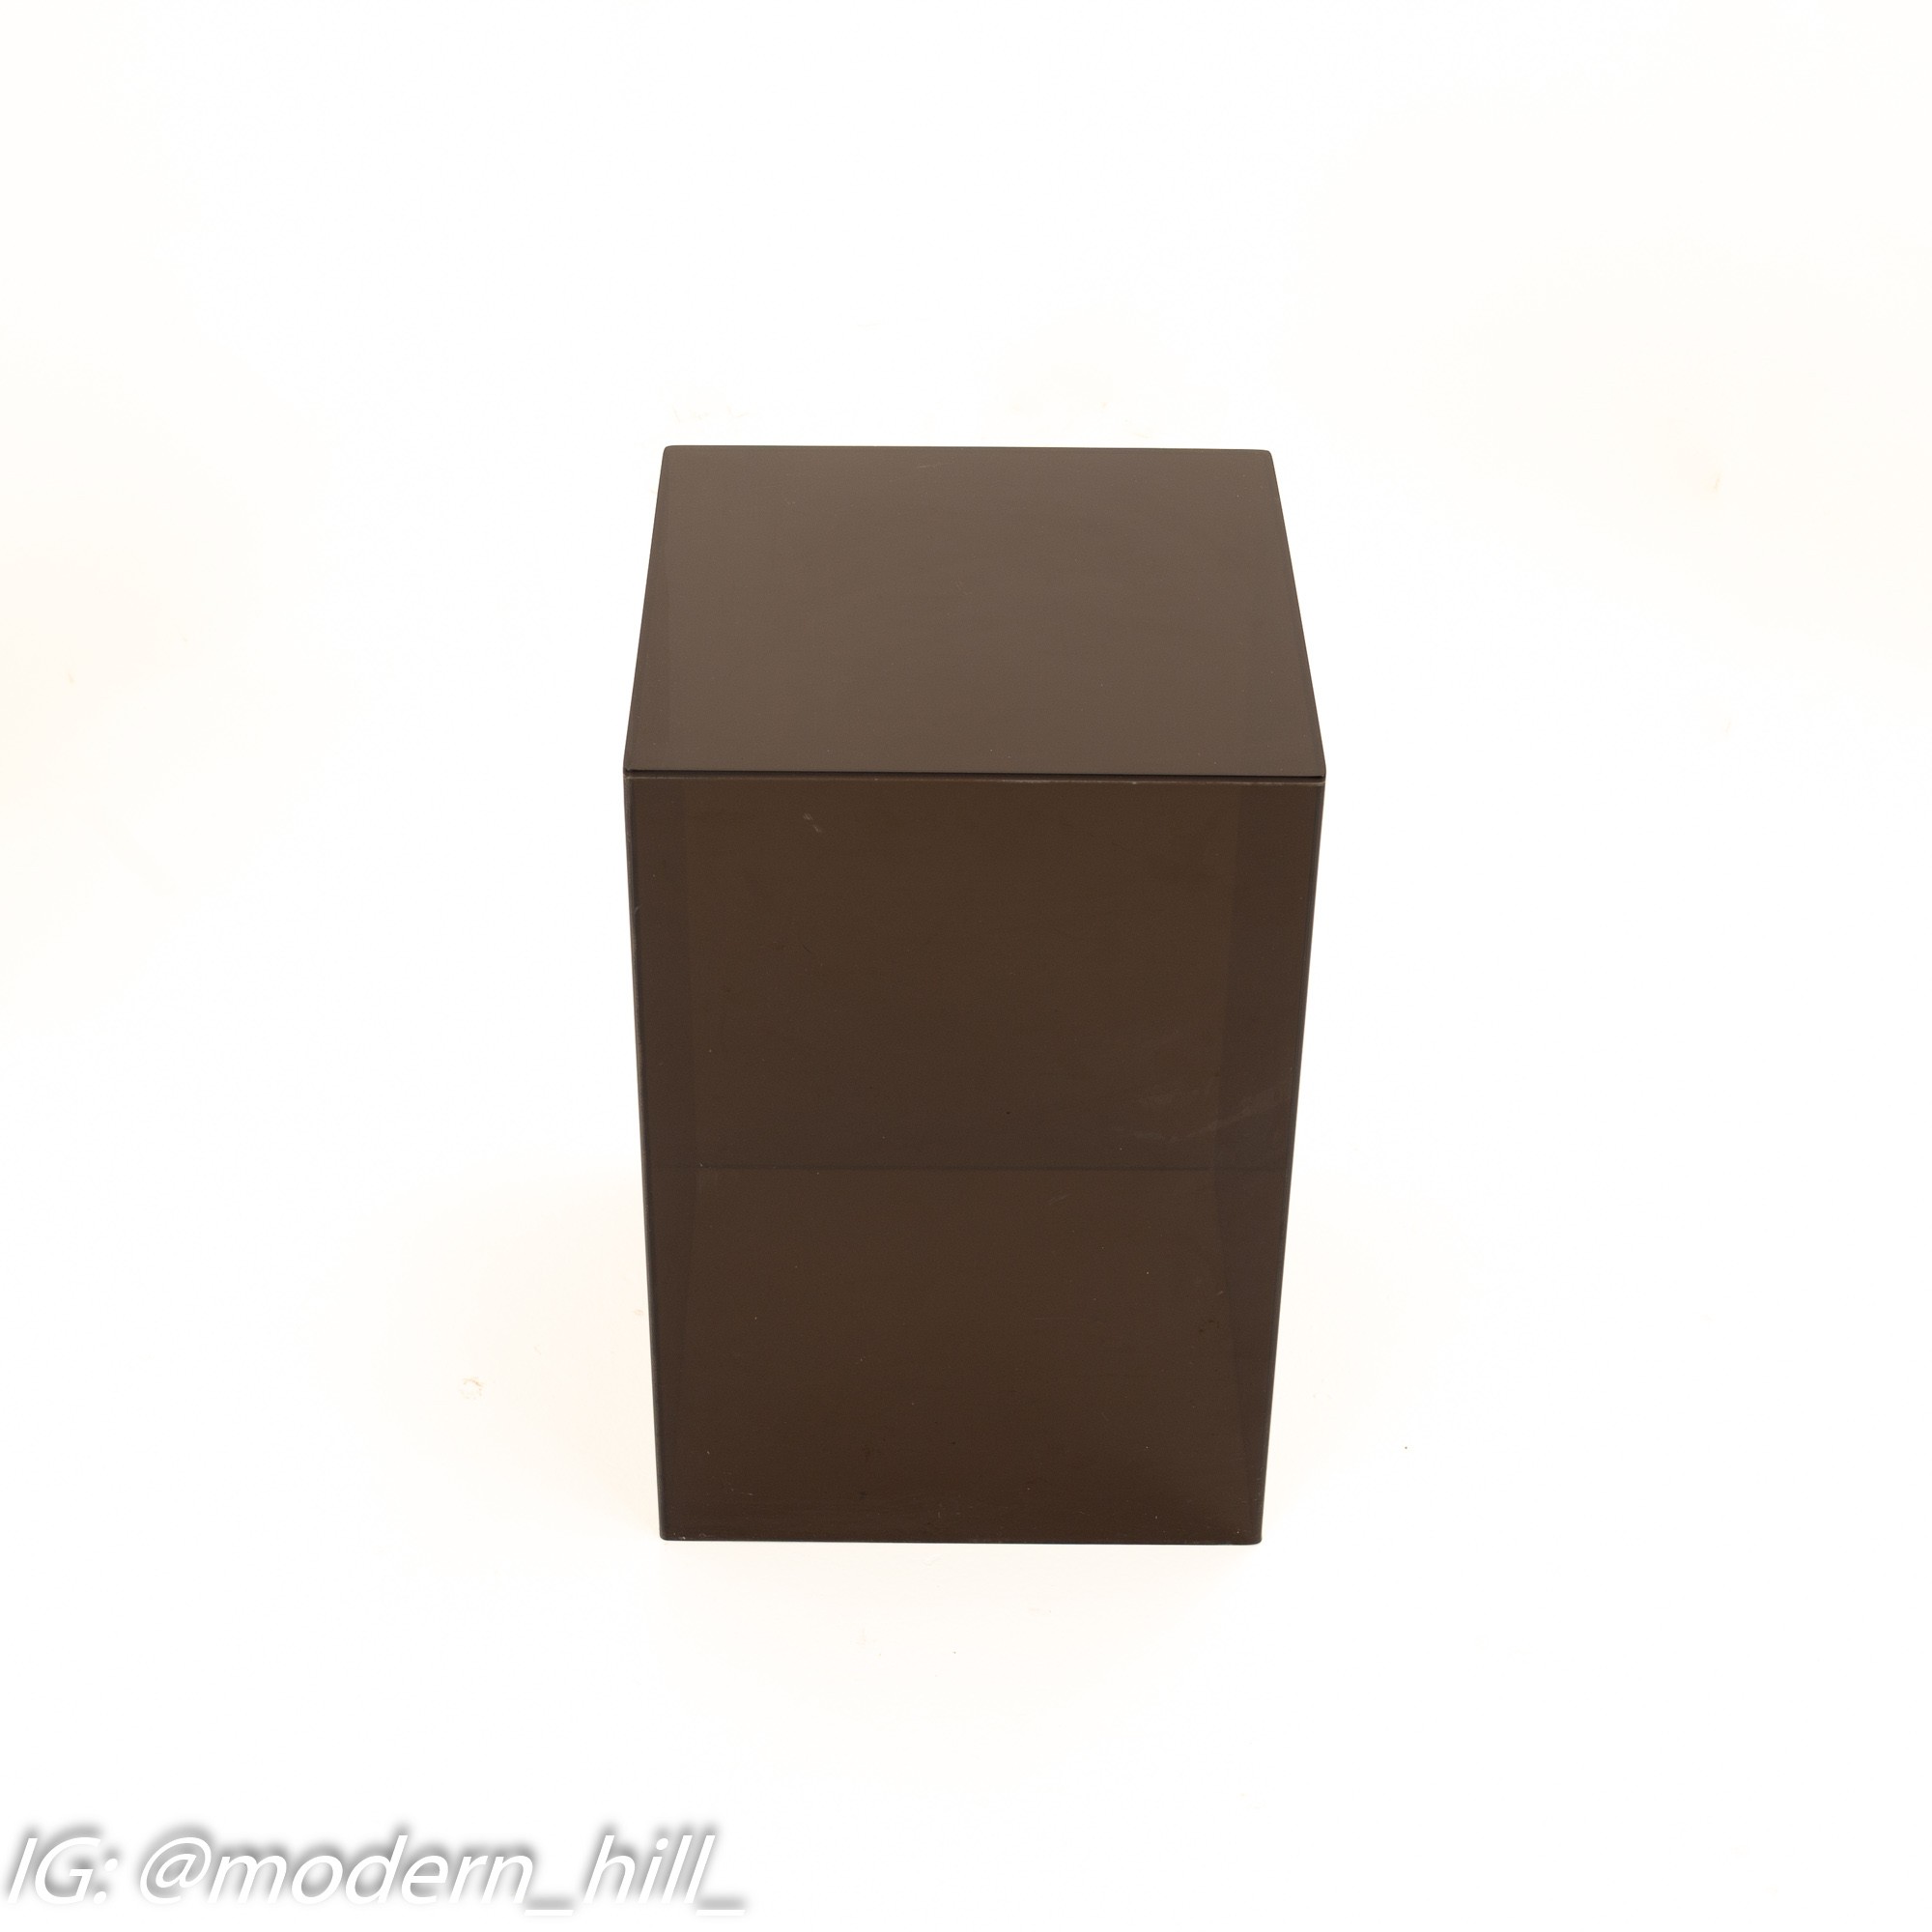 Mid Century Black Acrylic Cube Side End Table